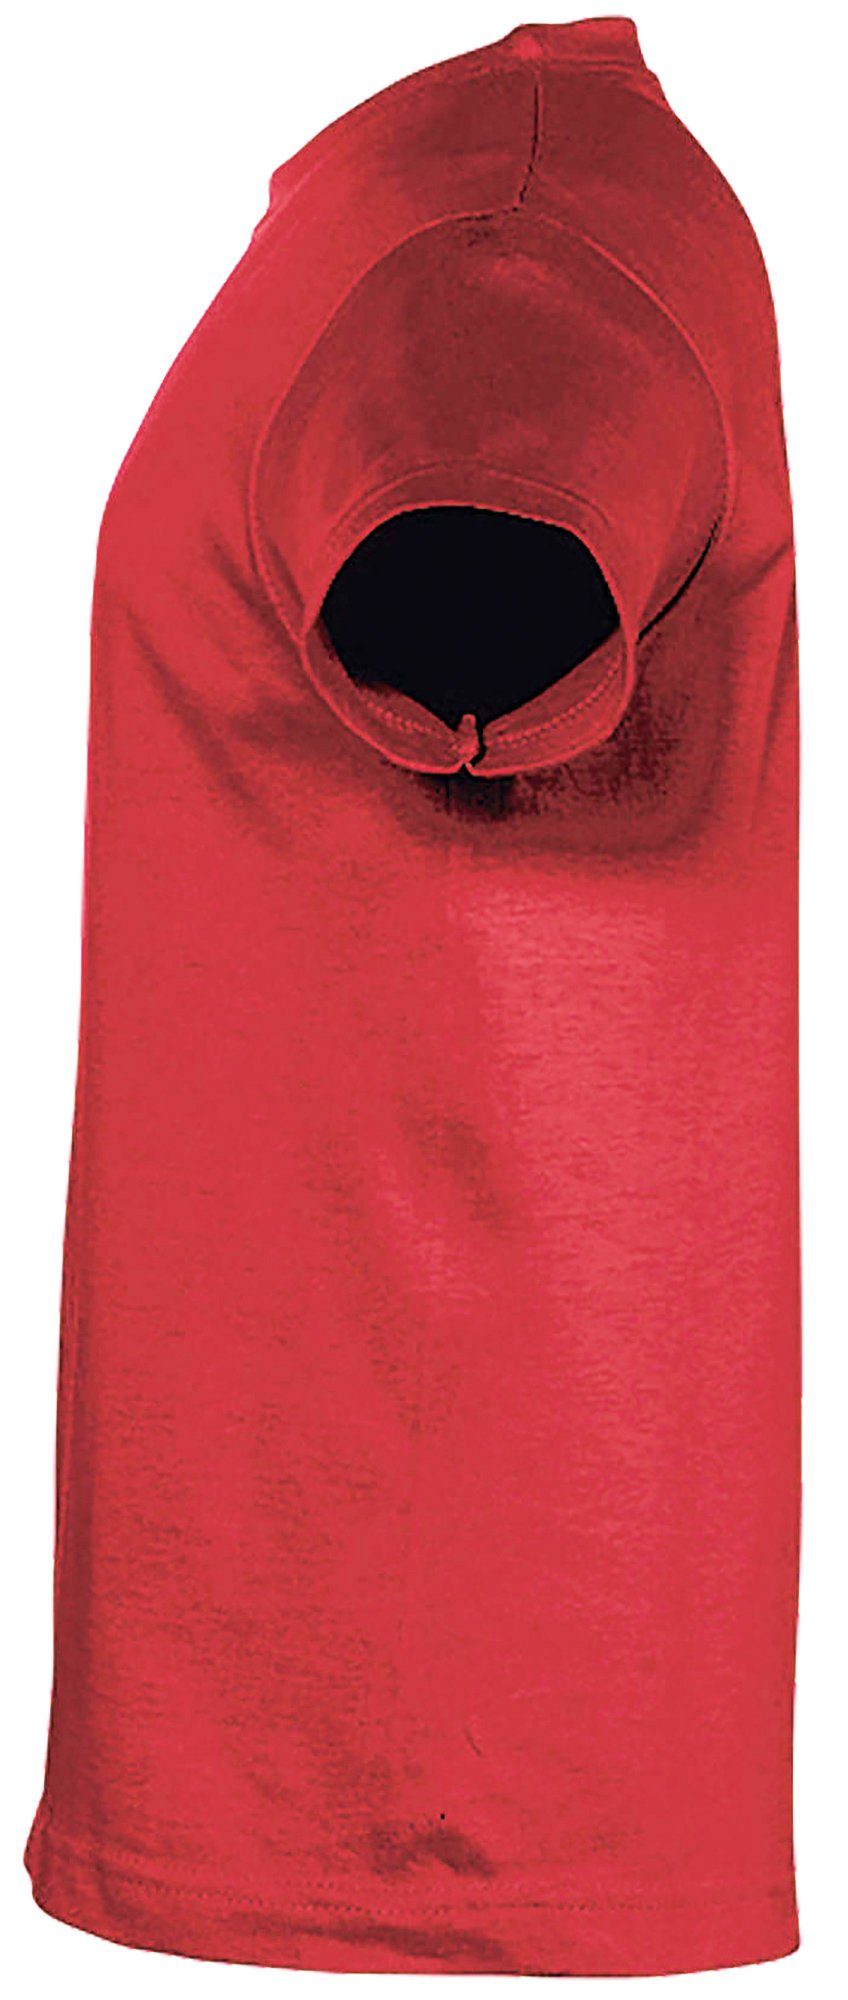 MyDesign24 Print-Shirt Kinder Hunde dab bedruckt i238 Baumwollshirt Hund mit - Aufdruck, T-Shirt rot tanzender